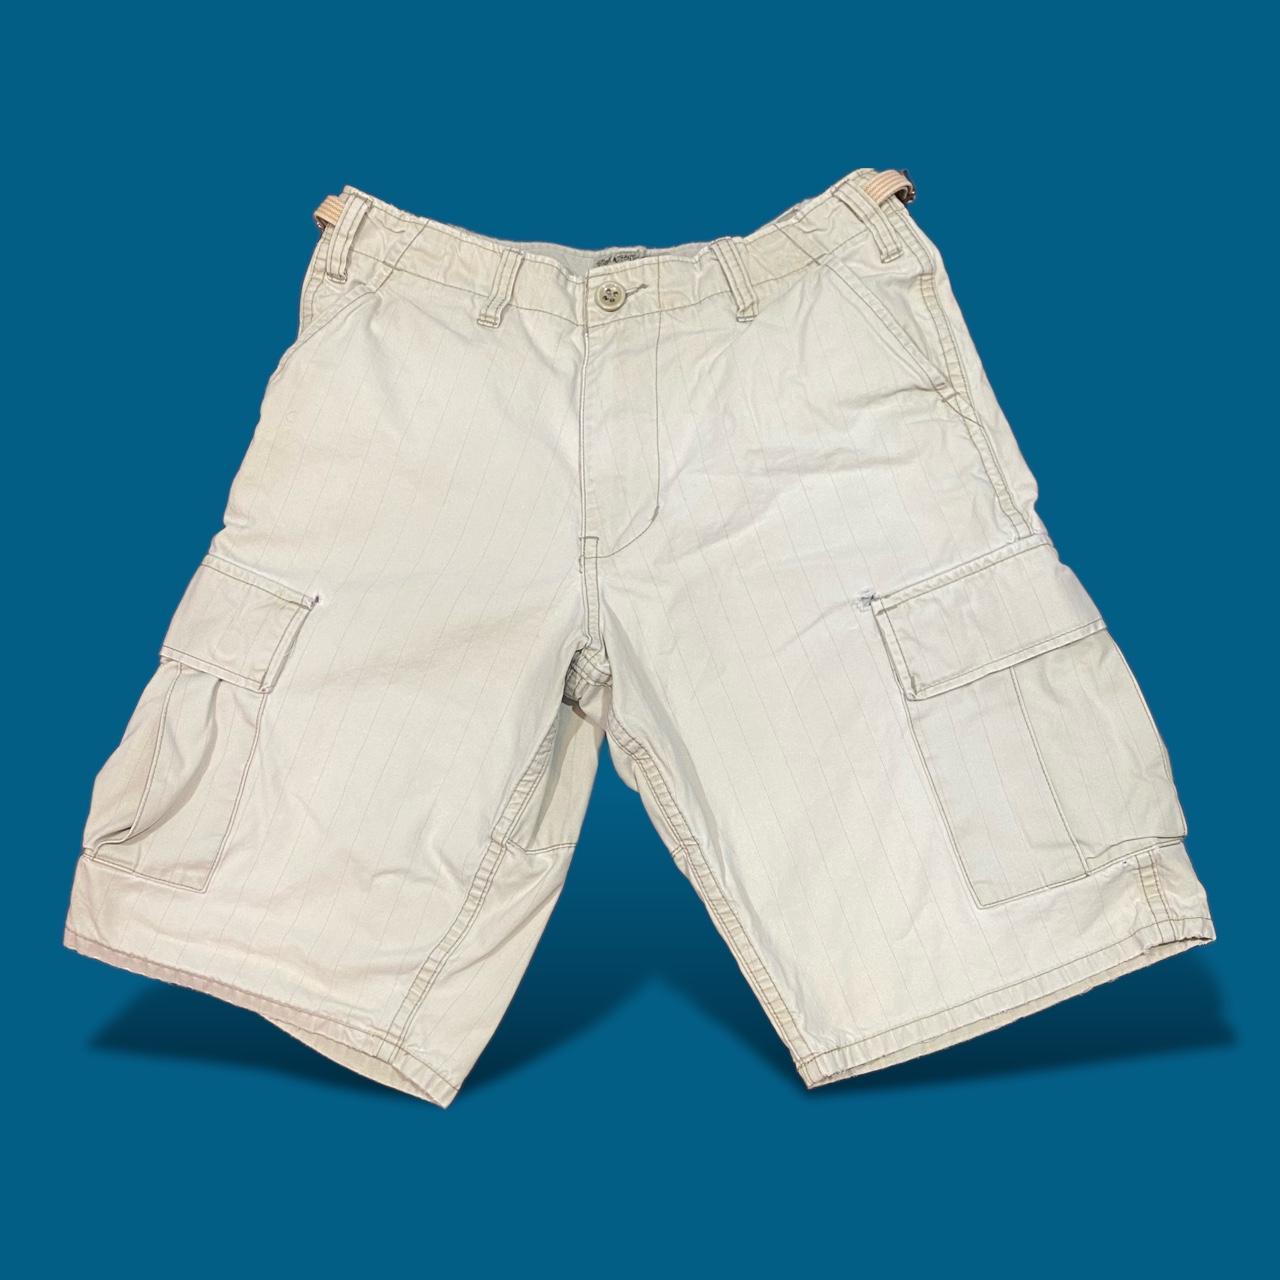 Stüssy Men's Shorts - Tan/Cream - 30